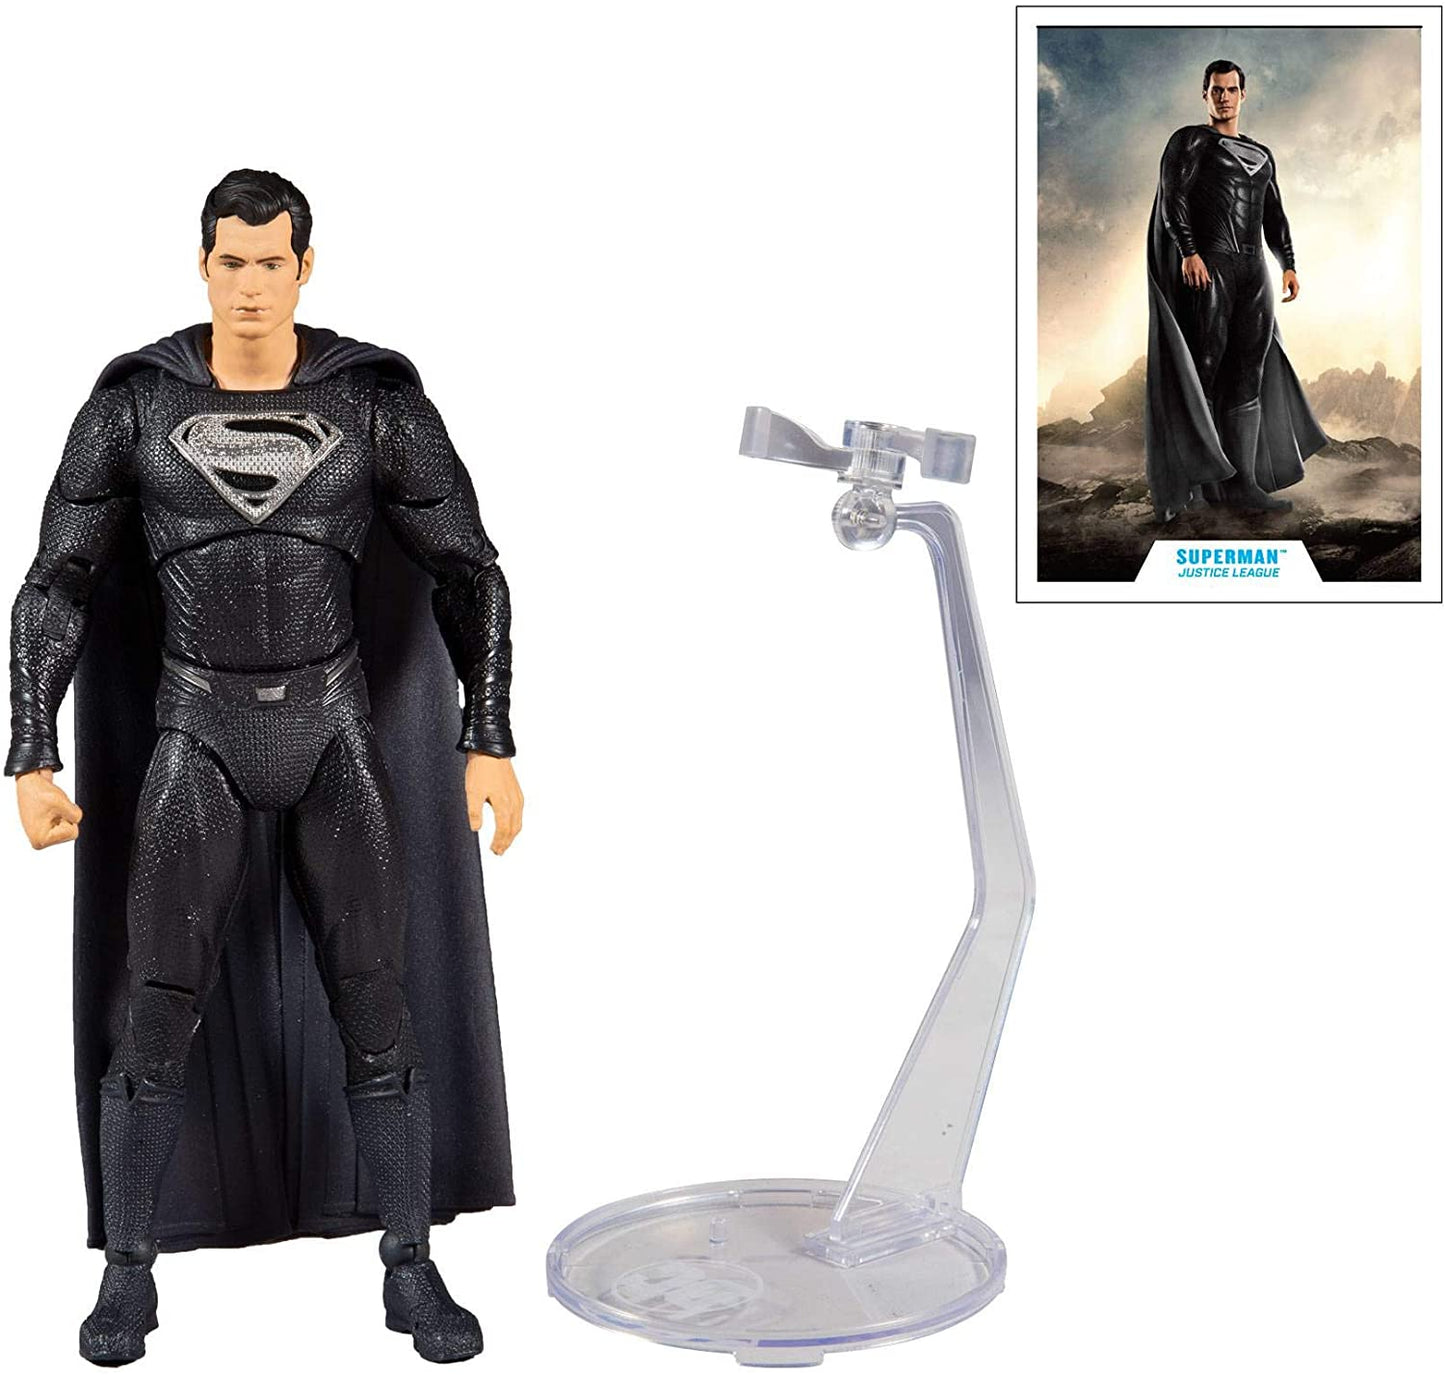 [PREORDER] McFarlane Justice League Superman (Black Suit)